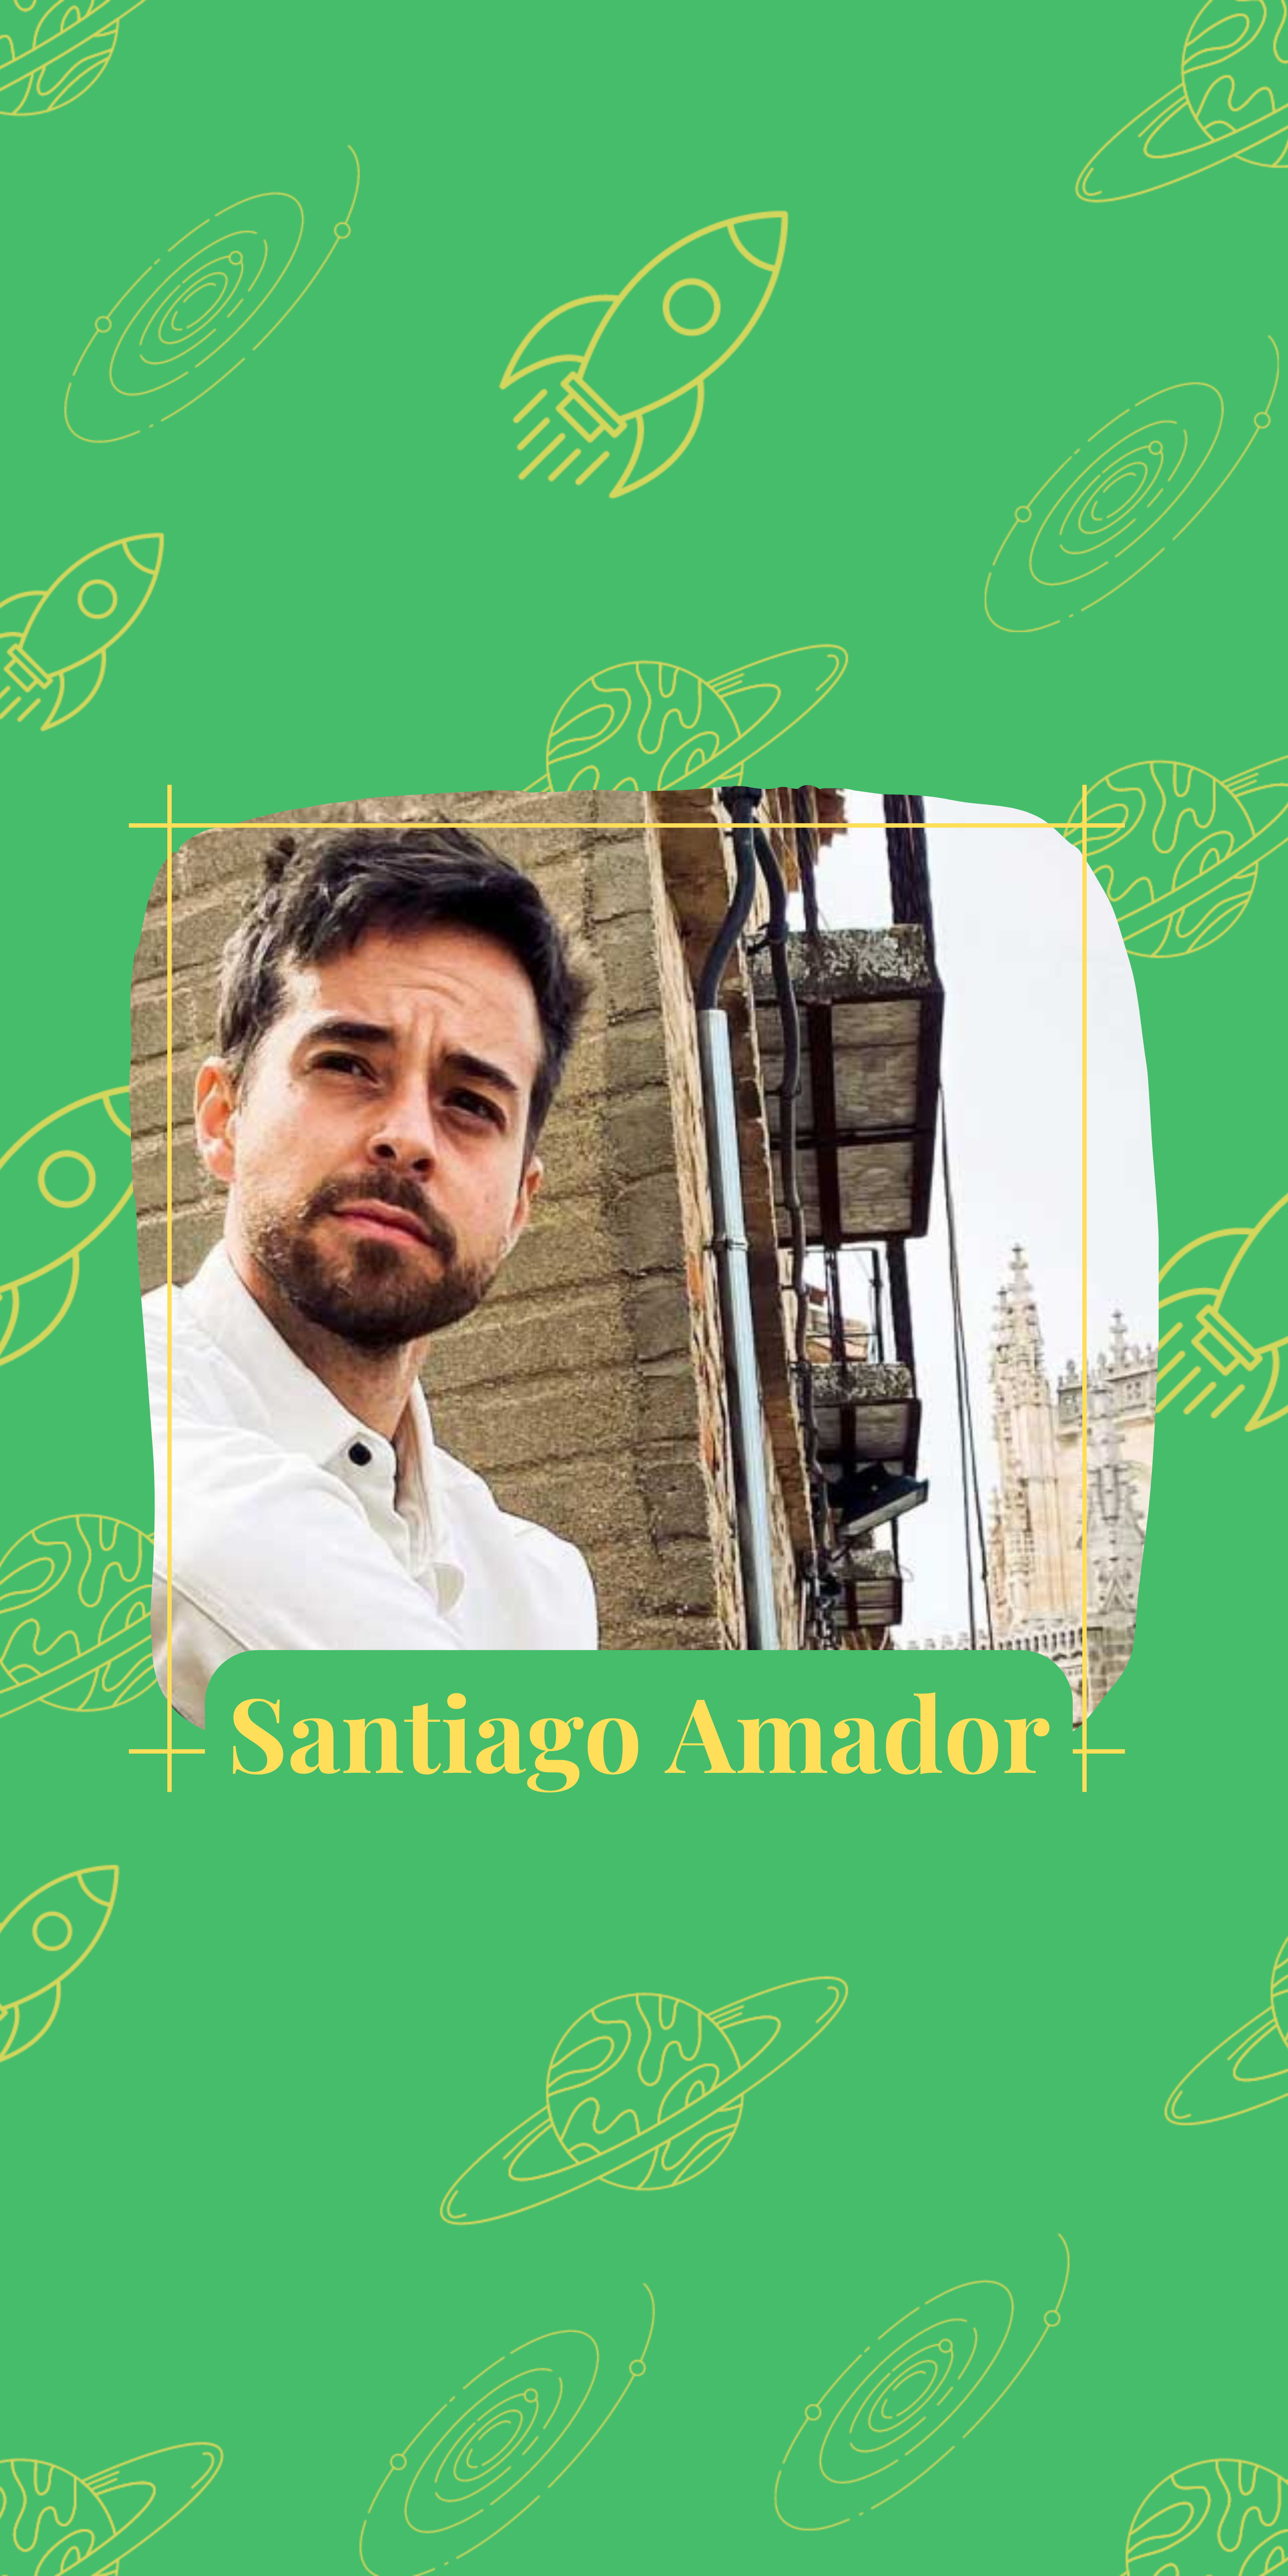 Entrevistamos a Santiago Amador.